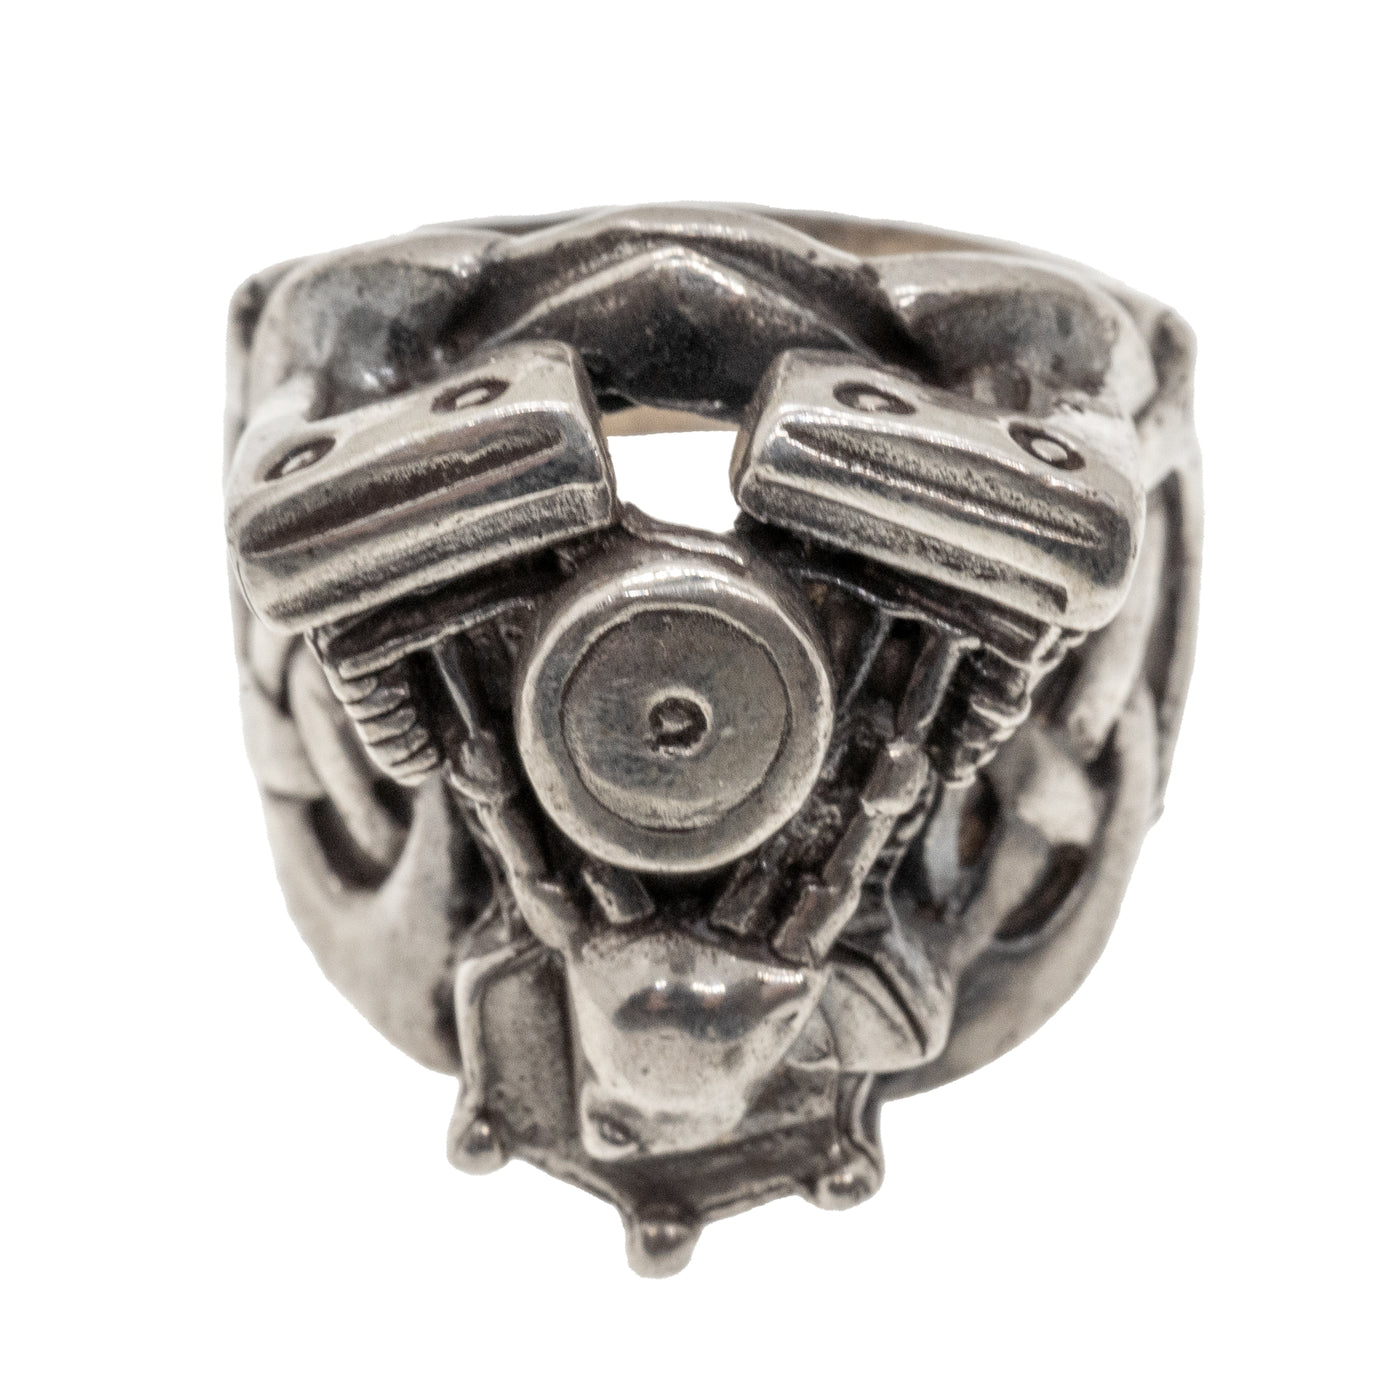 V Twin Bike Engine Ring 925 sterling silver